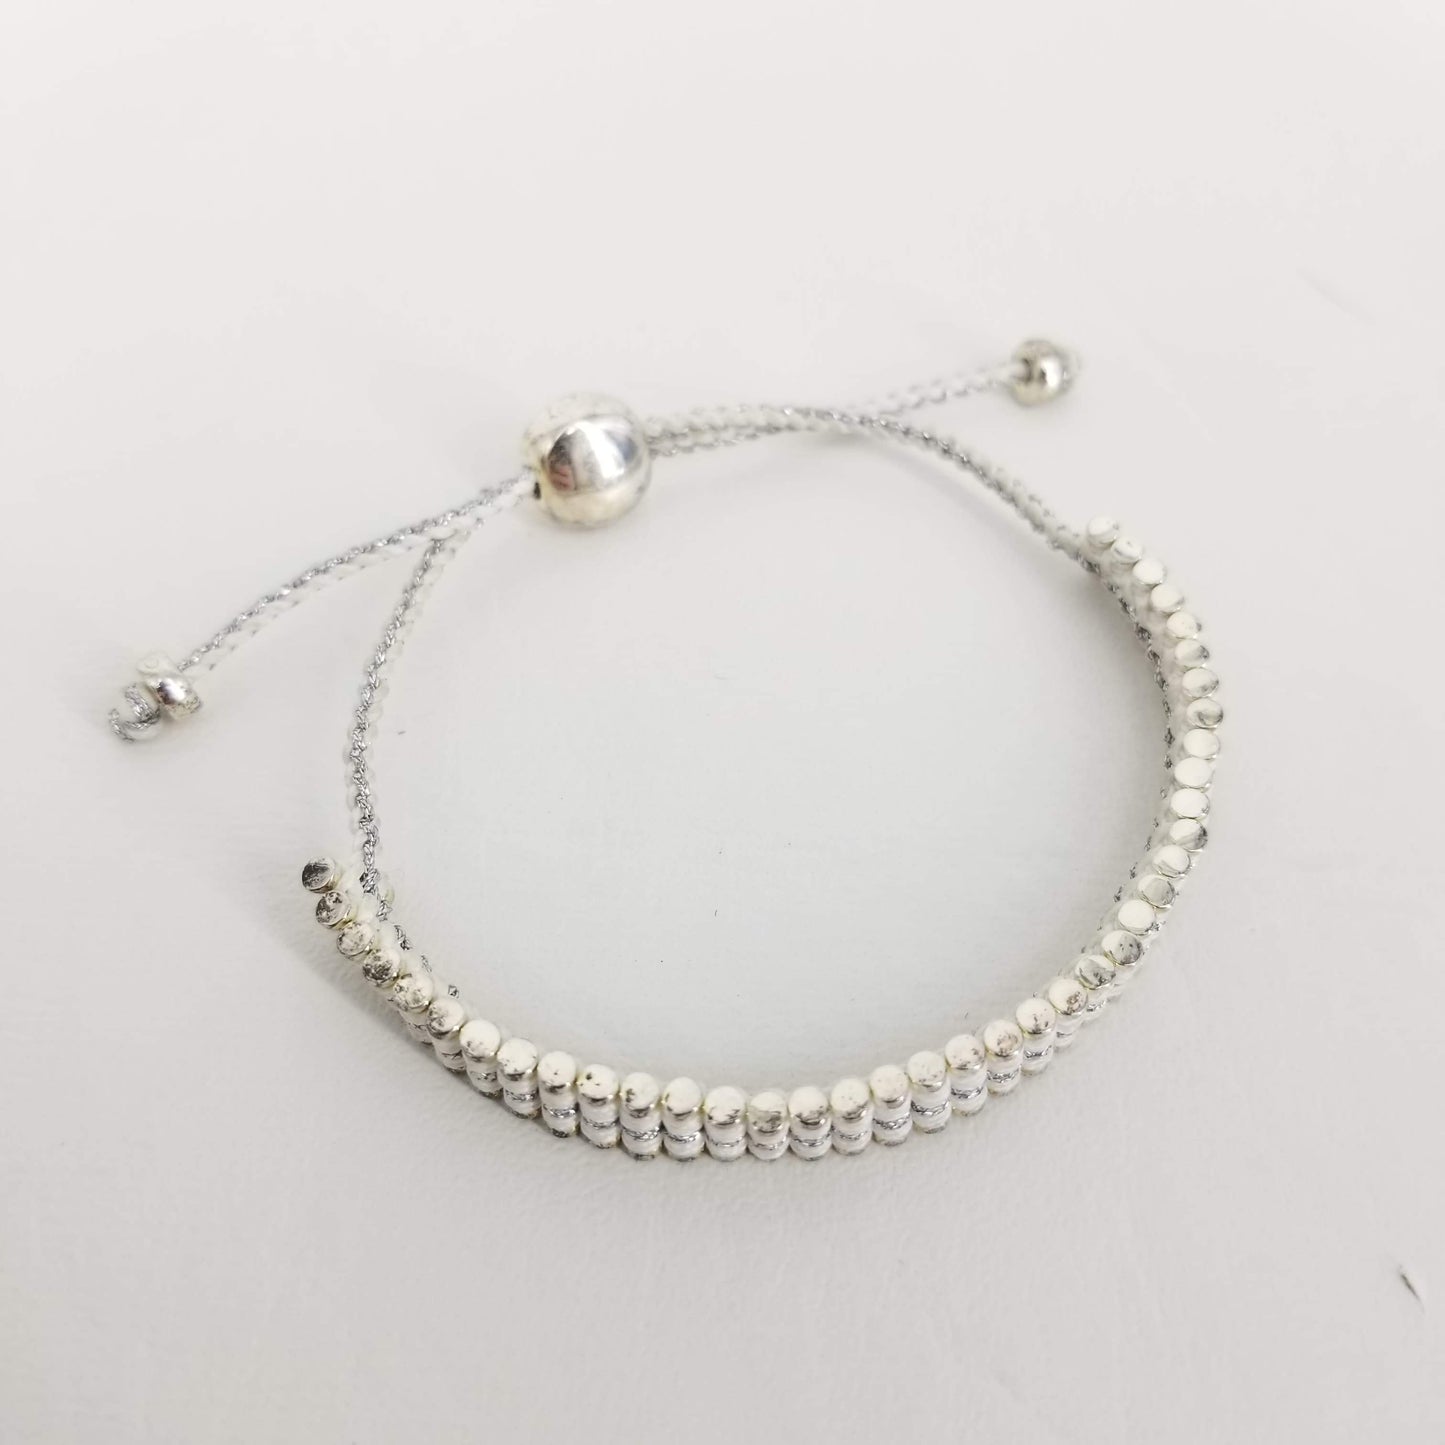 Authentic Links of London Silver Friendship Bracelet